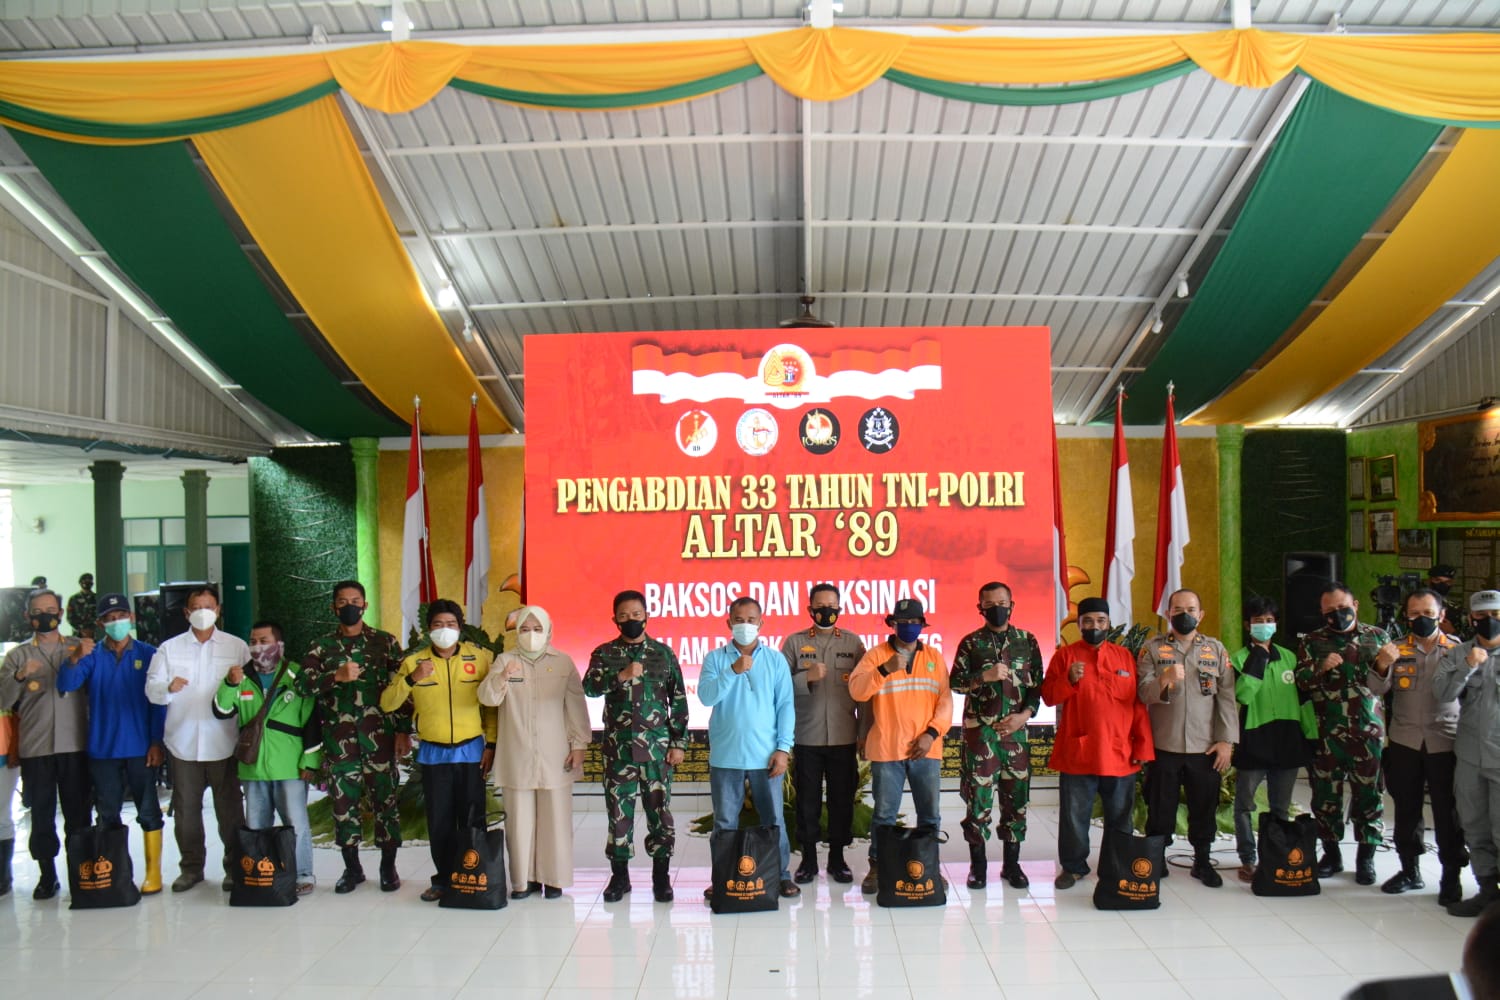 Pengabdian 33 tahun TNI-Polri Akabri 89 menggelar bakti sosial dan vaksinasi dalam rangka menyambut perayaan HUT TNI ke-76 dengan Tema Indonesia Tangguh Indonesia Tumbuh di Mako Yonif RK 136/TS Kota Batam. (hms)